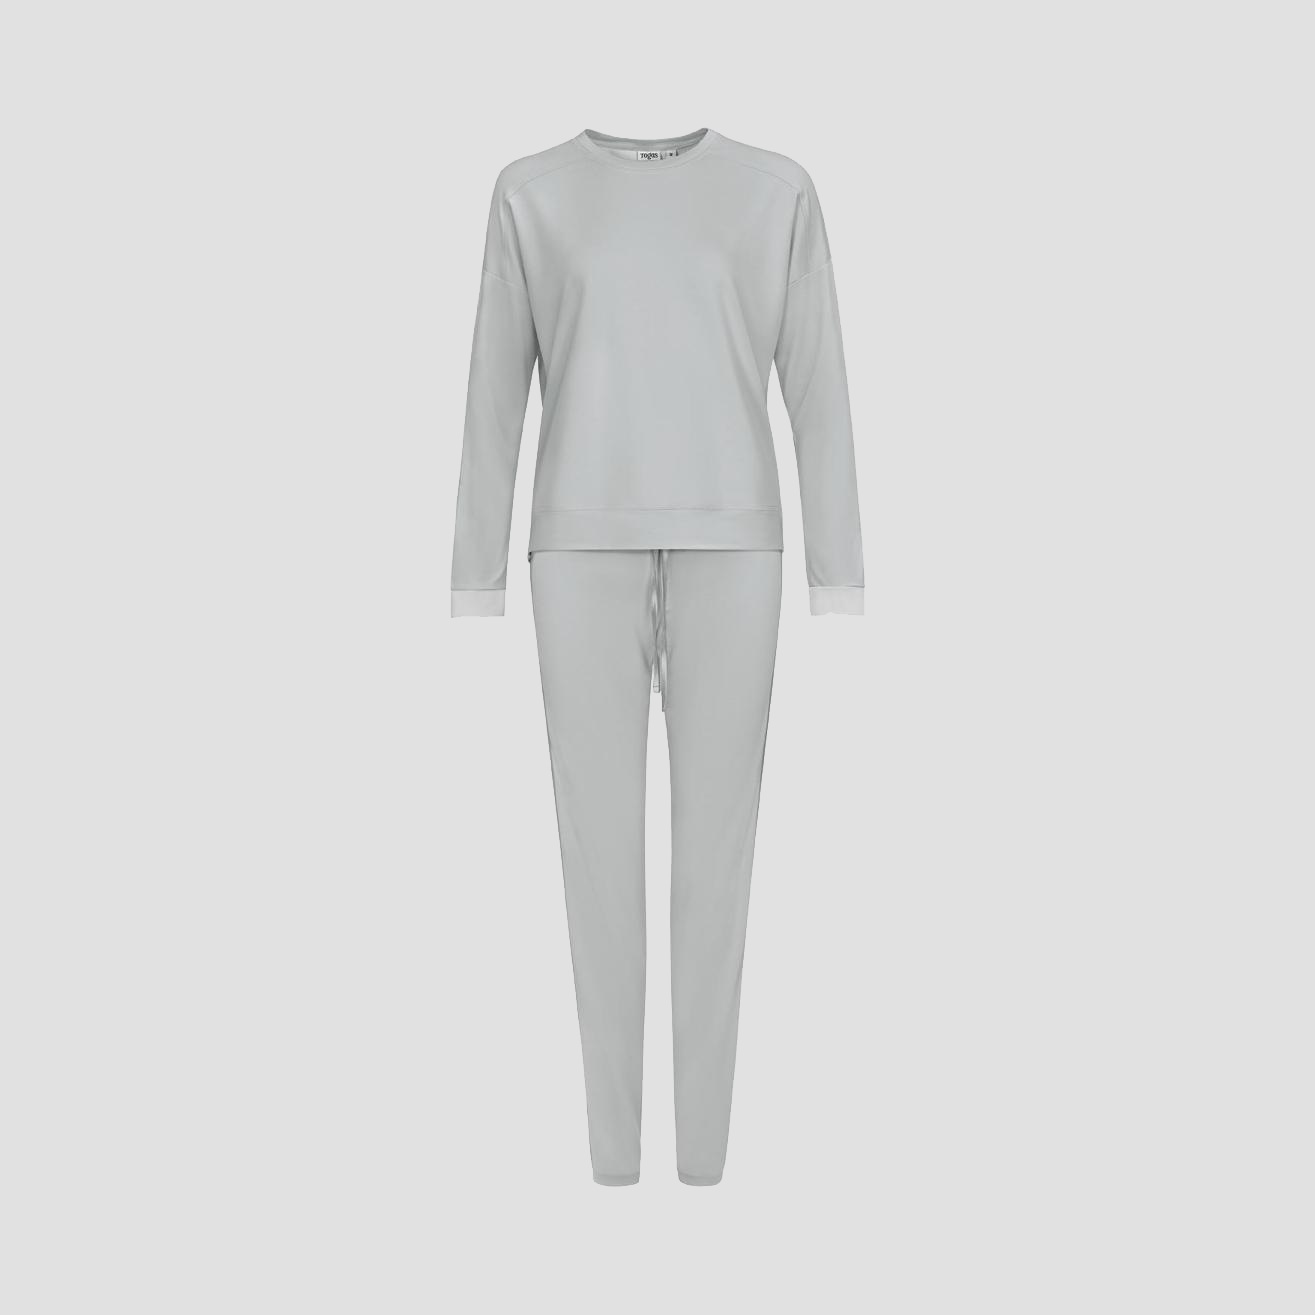 Пижама Togas Рене серая женская M/46, цвет серый, размер 46 - фото 1